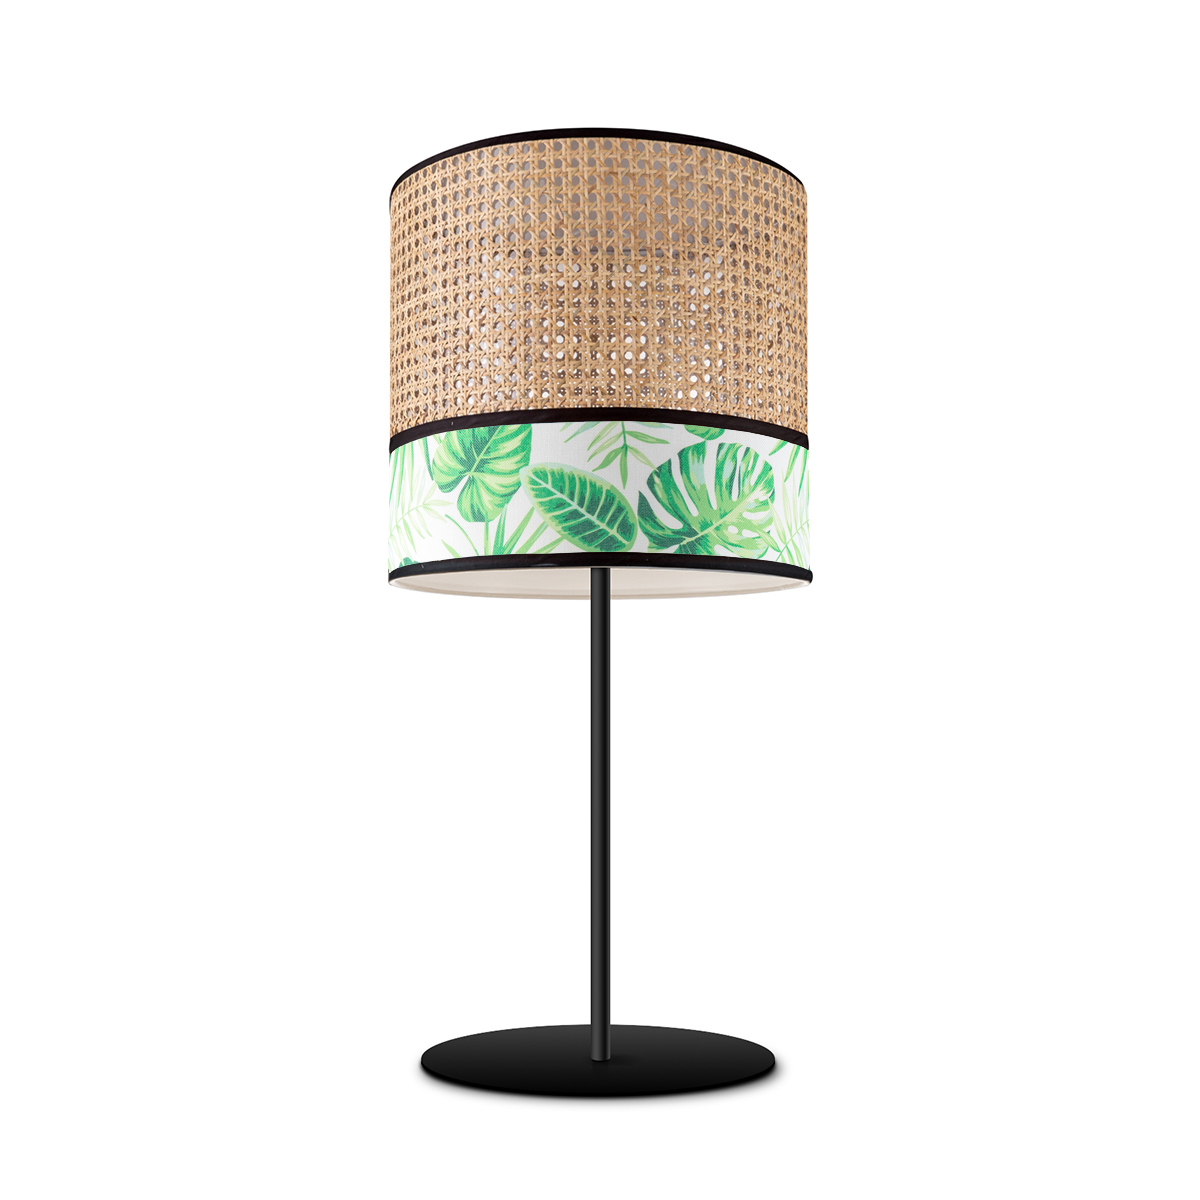 Tangla lighting - TLT7011-25A - Table lamp 1 Light - metal + rattan + TC fabric - spring - natural leaf - E27